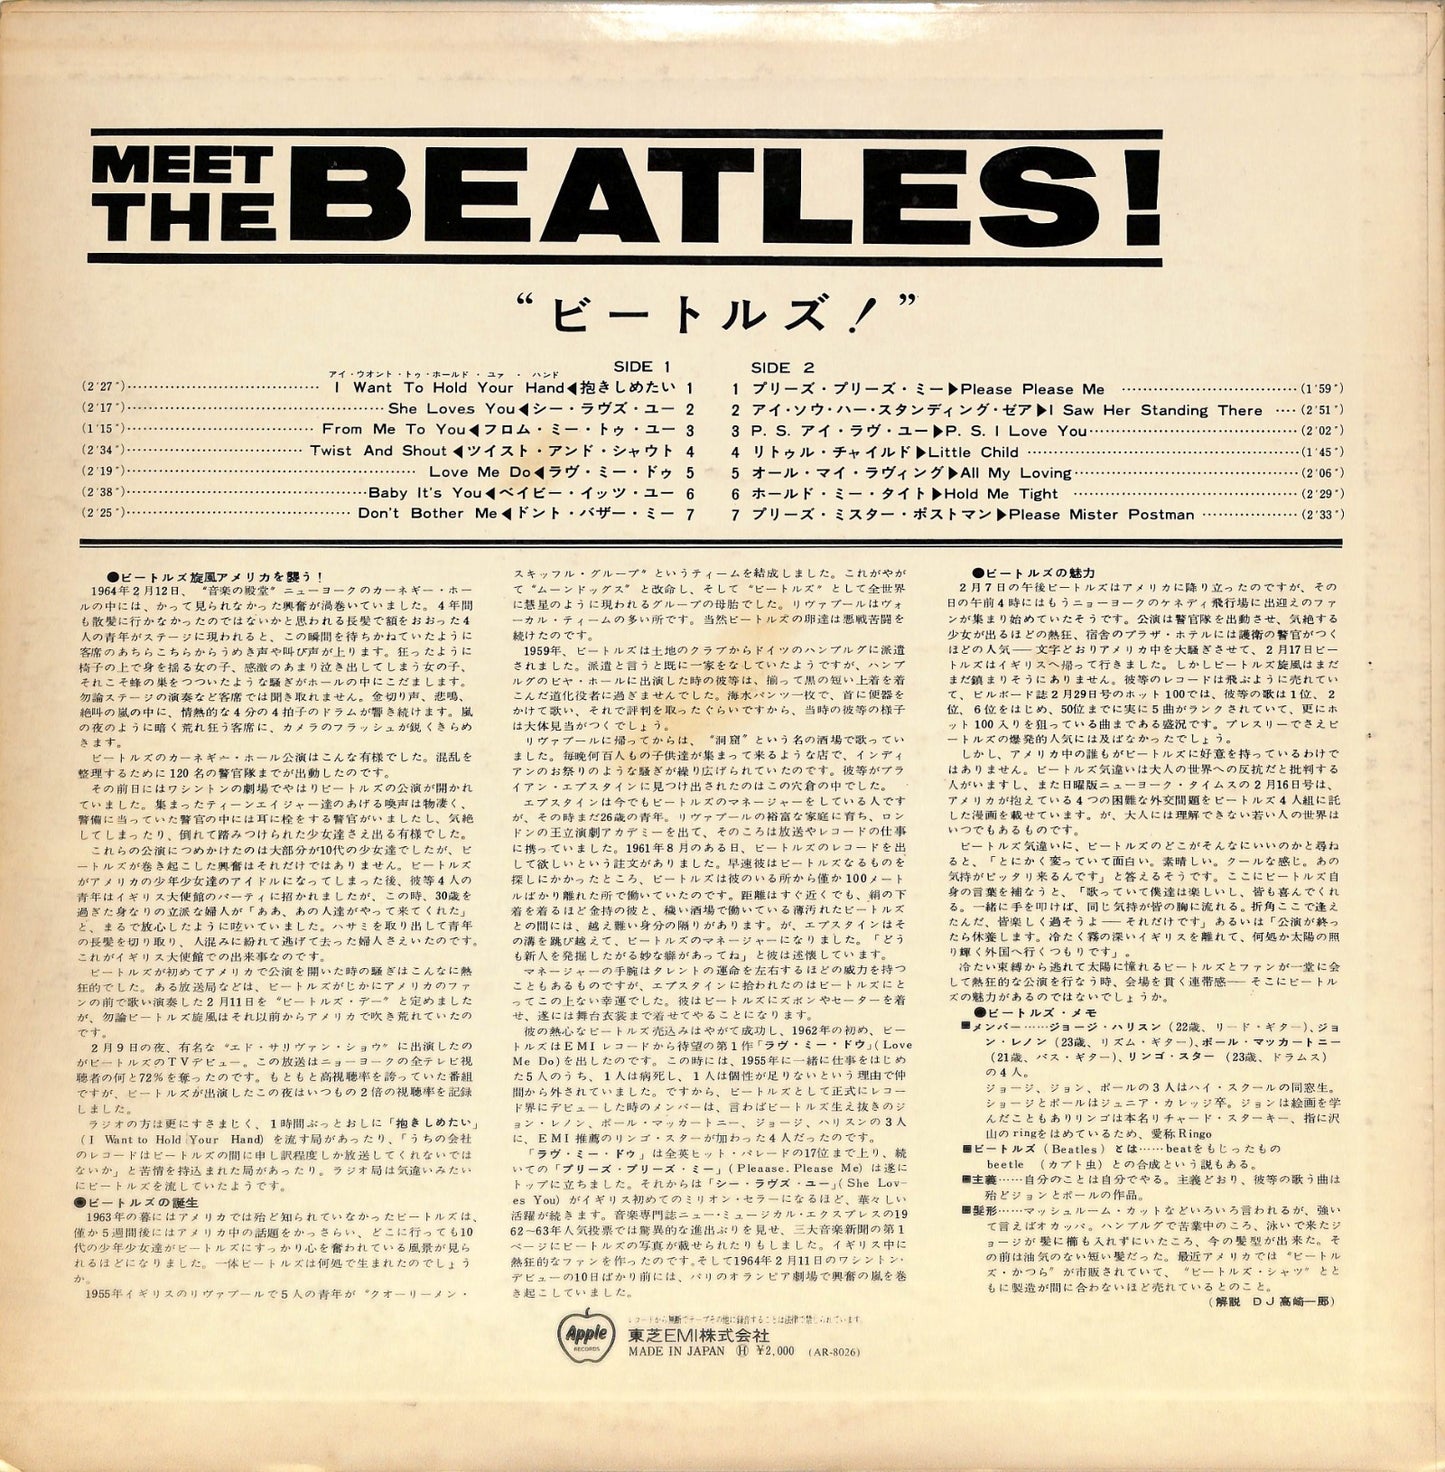 THE BEATLES - Meet The Beatles